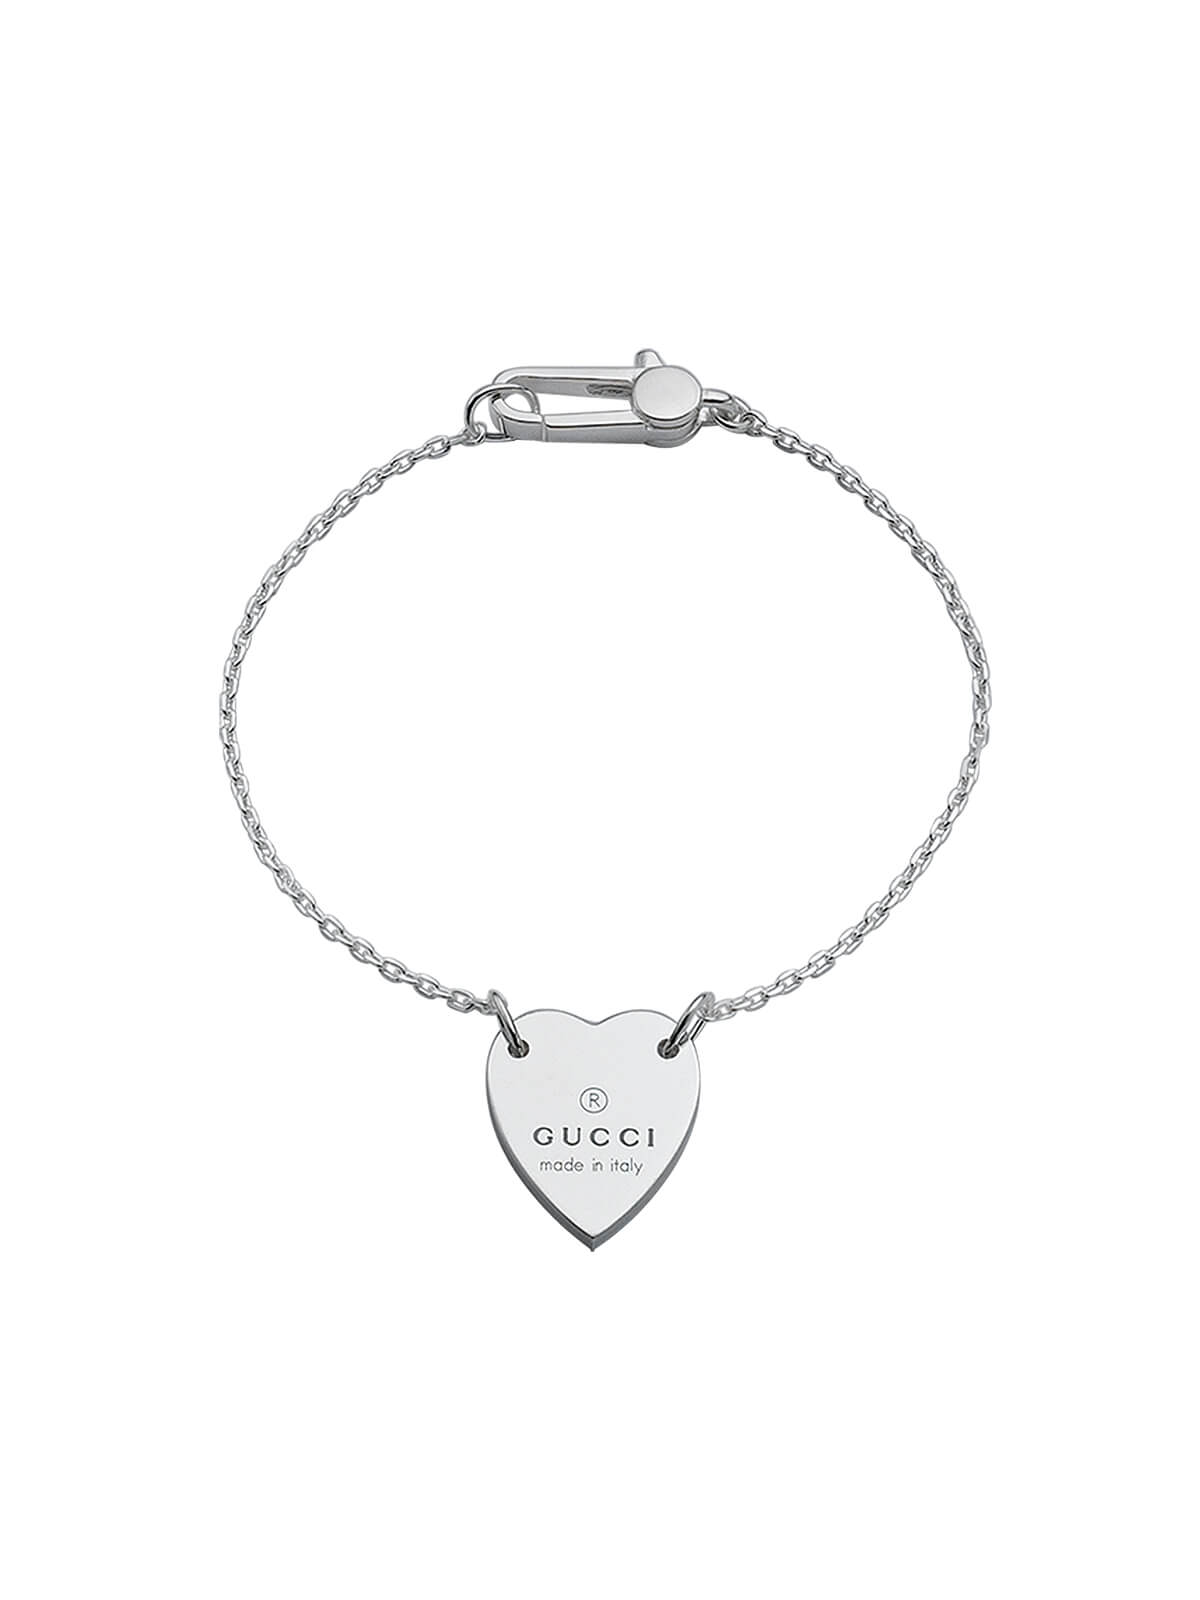 Gucci Trademark Heart Silver Bracelet 17cm